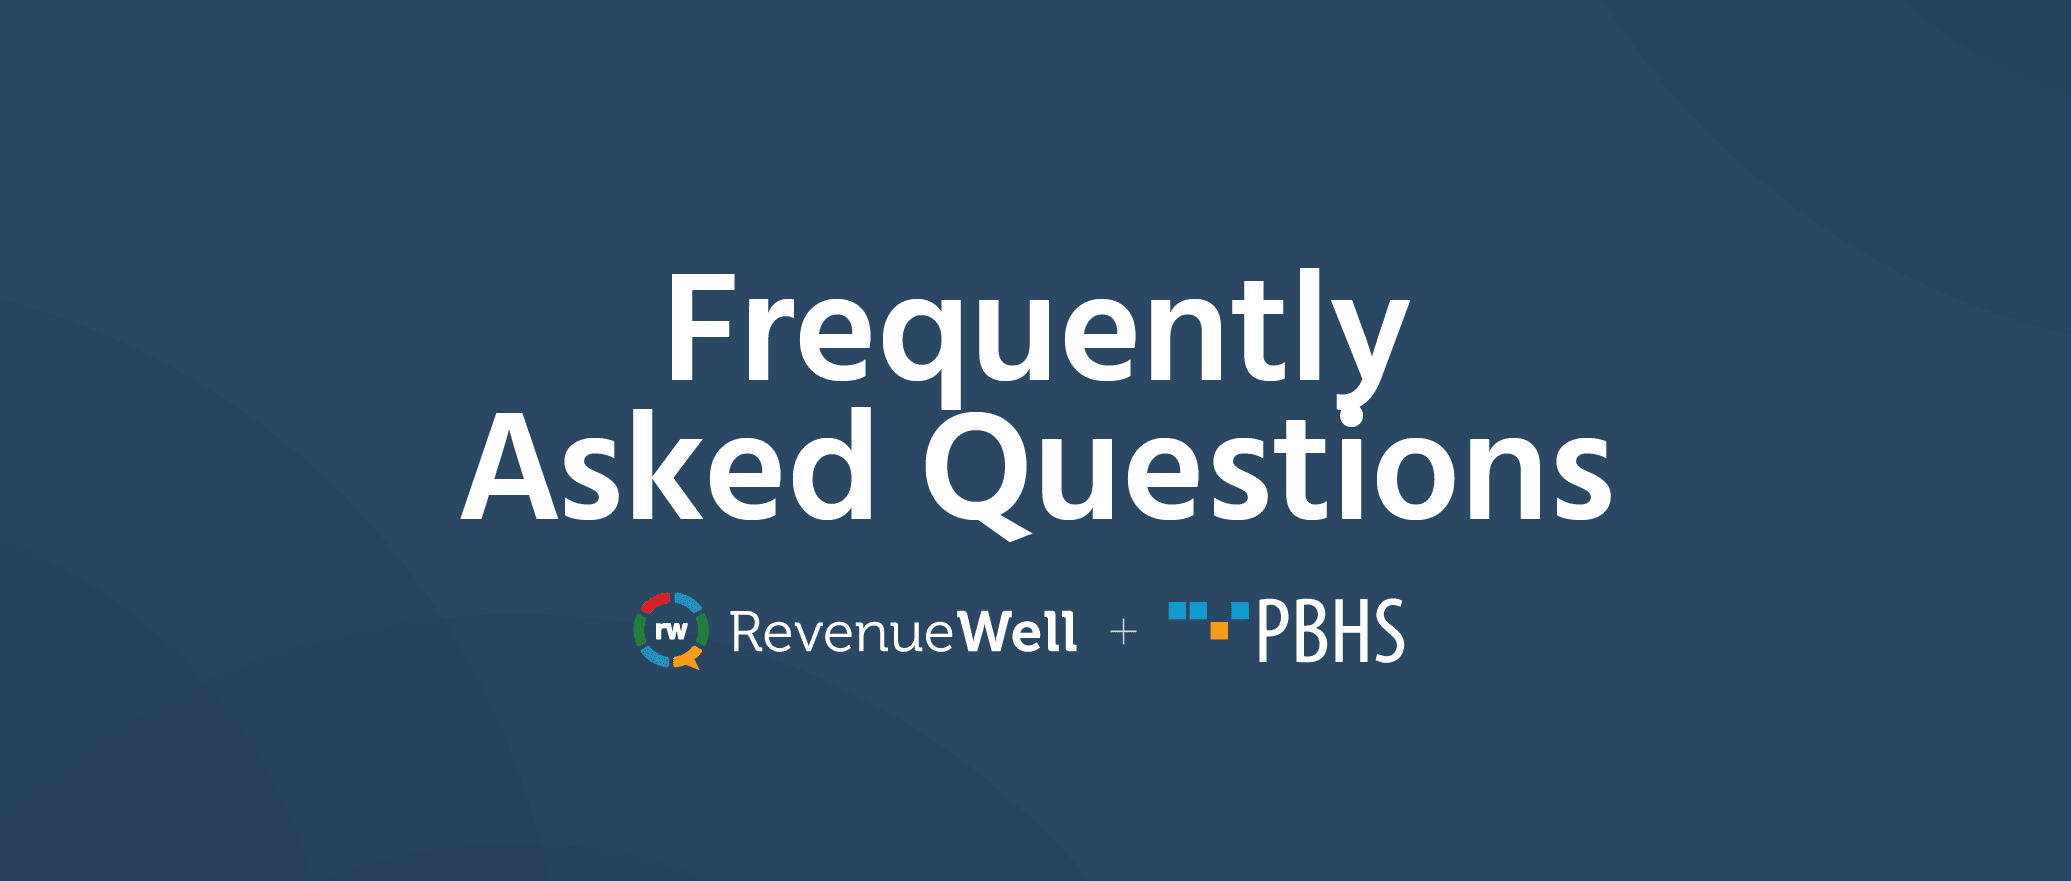 FAQ on RevenueWell acquisition of PBHS